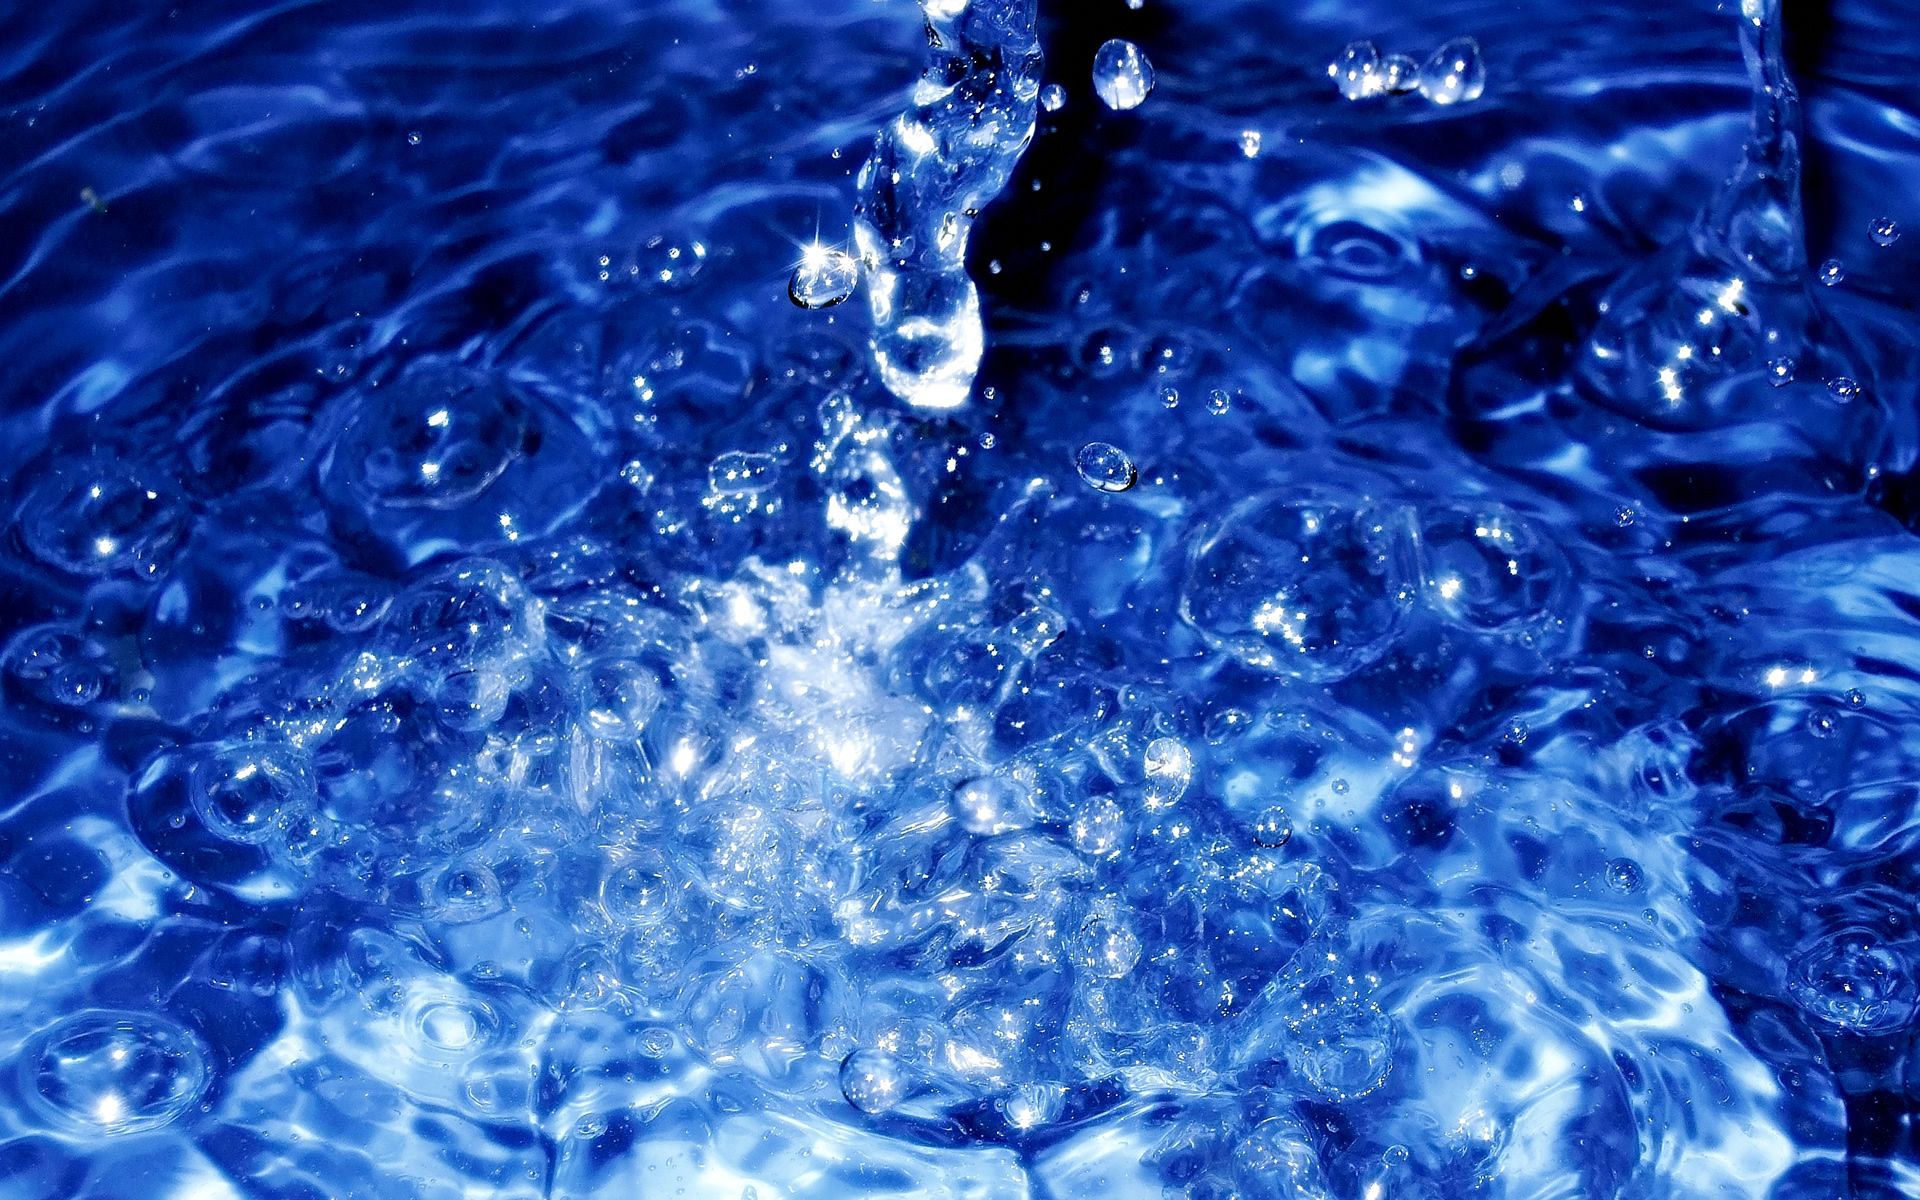 Картинка вода 4. Вода обои. Картинки на рабочий стол вода. Вода фон. Текучие воды.